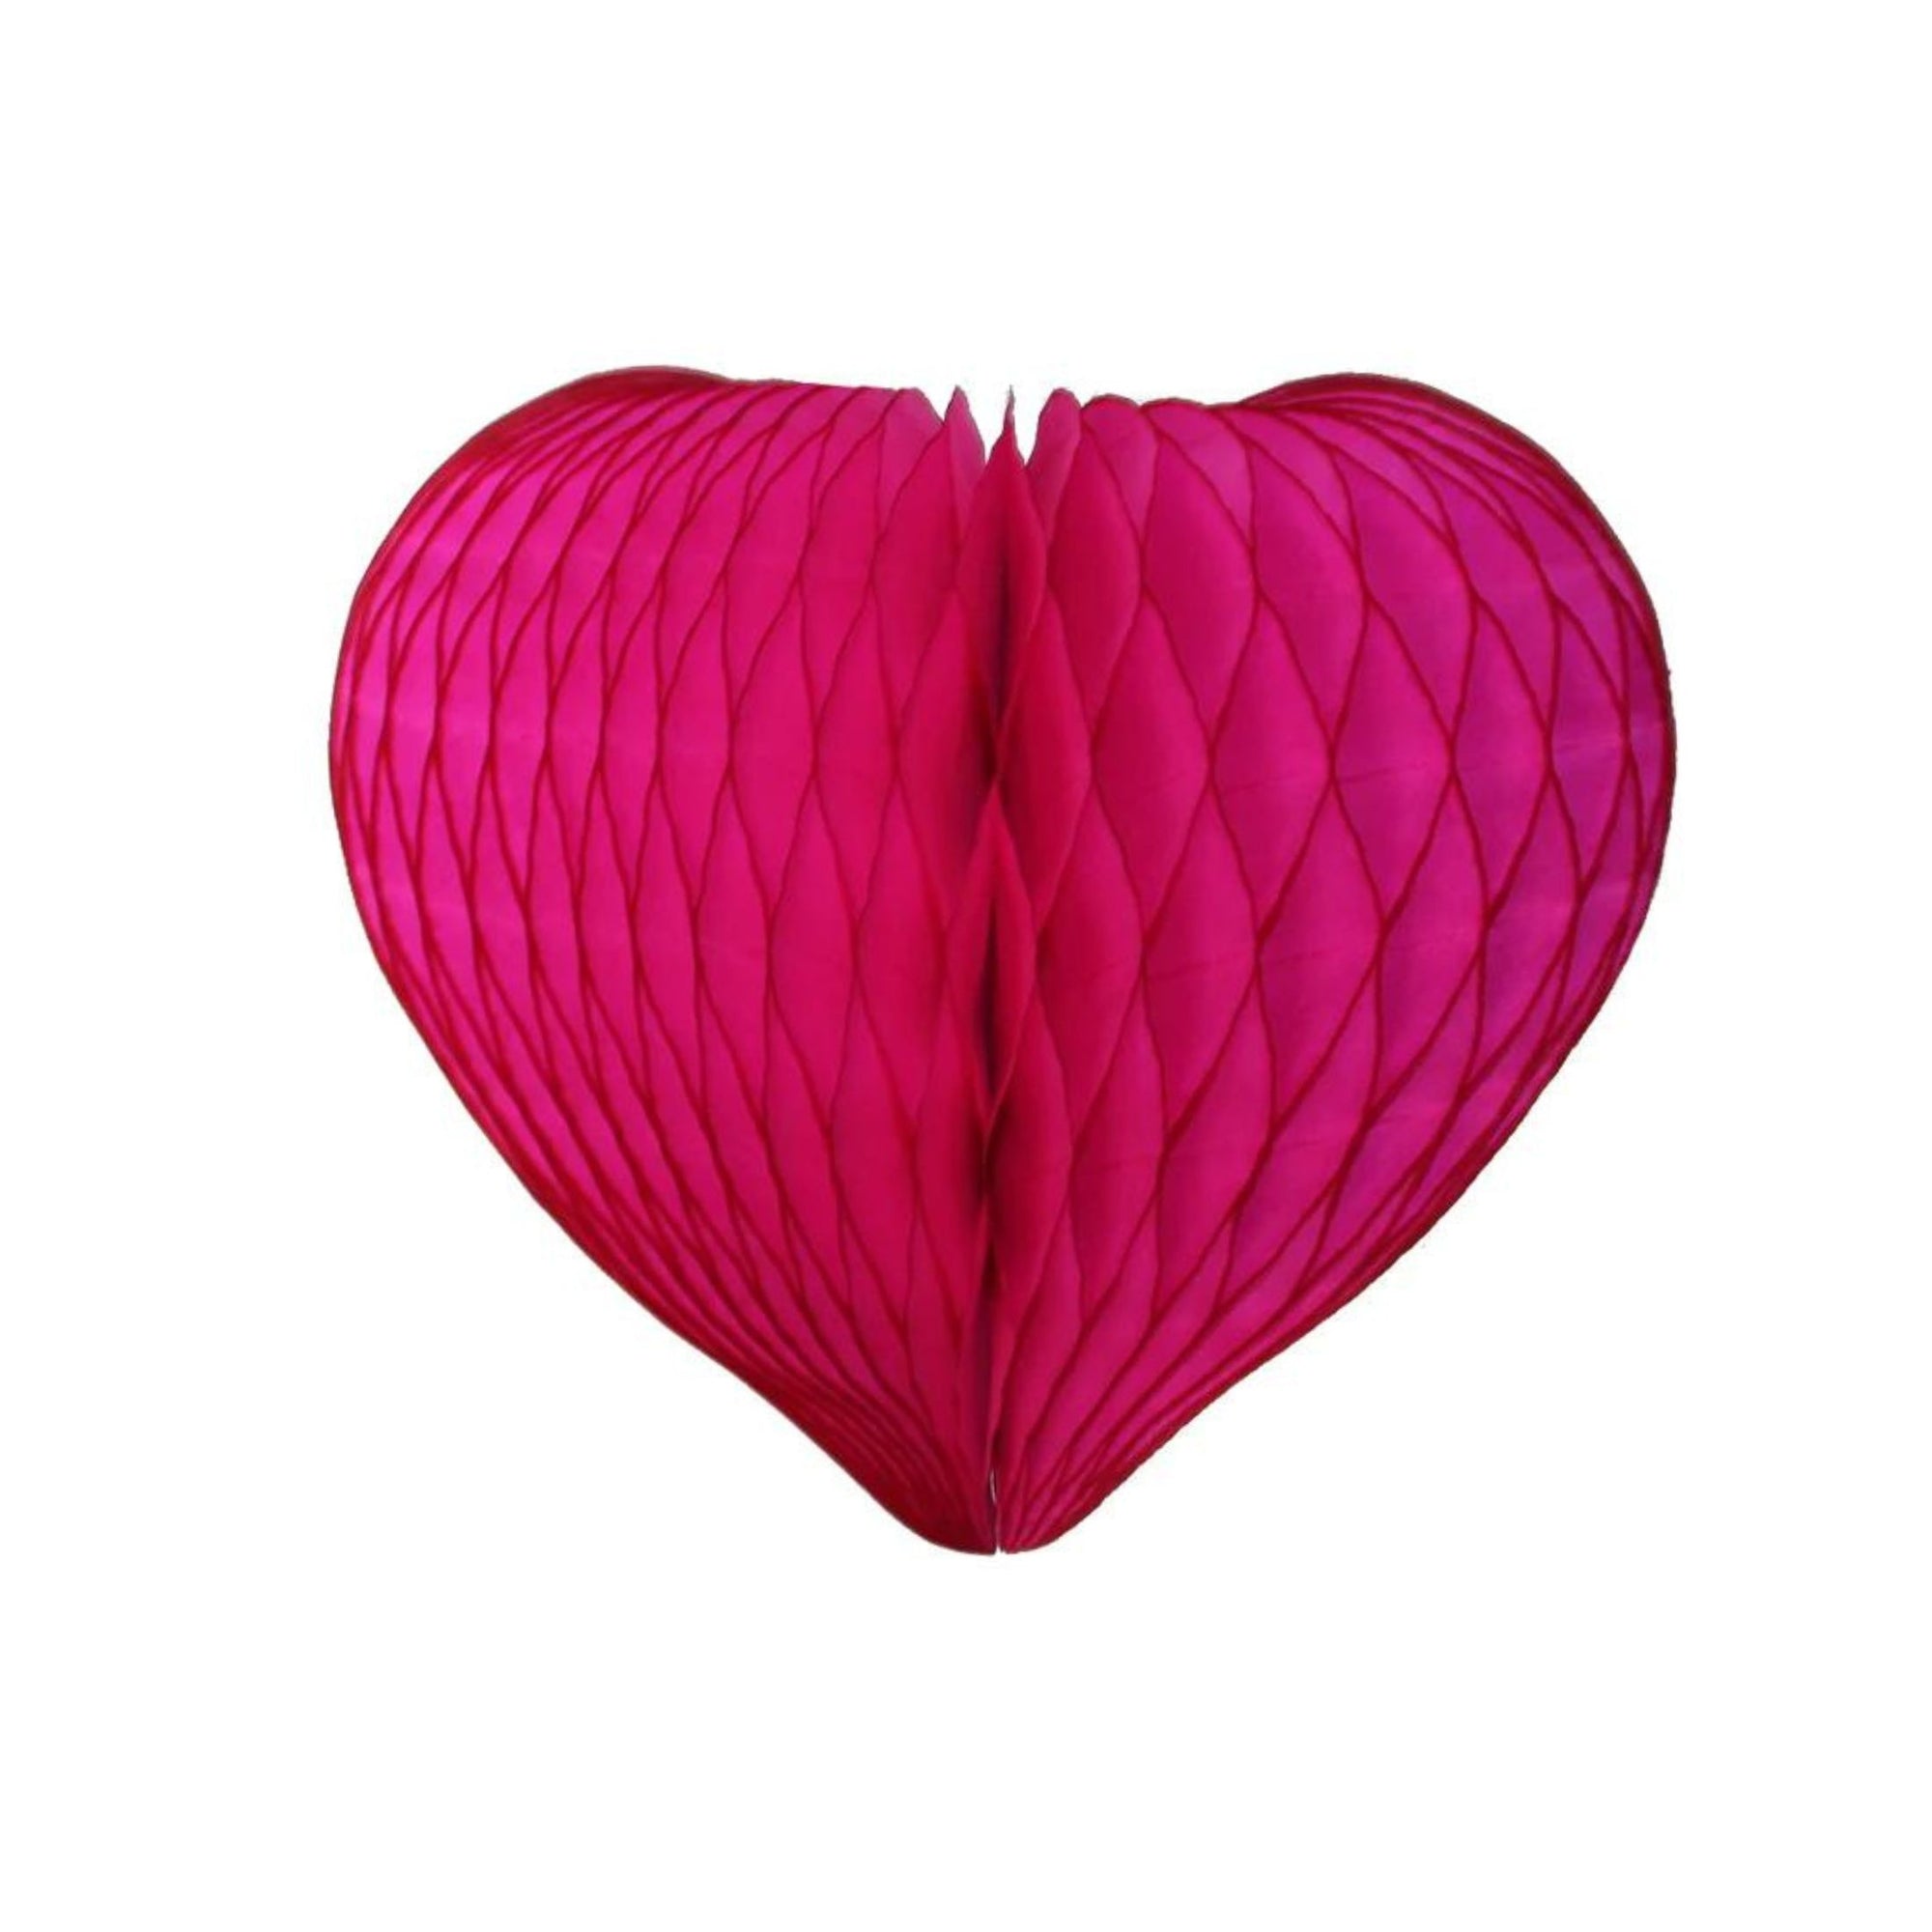 Mini Honeycomb heart decoration 8 Inch - Cerise-Fun-Little Fish Co.